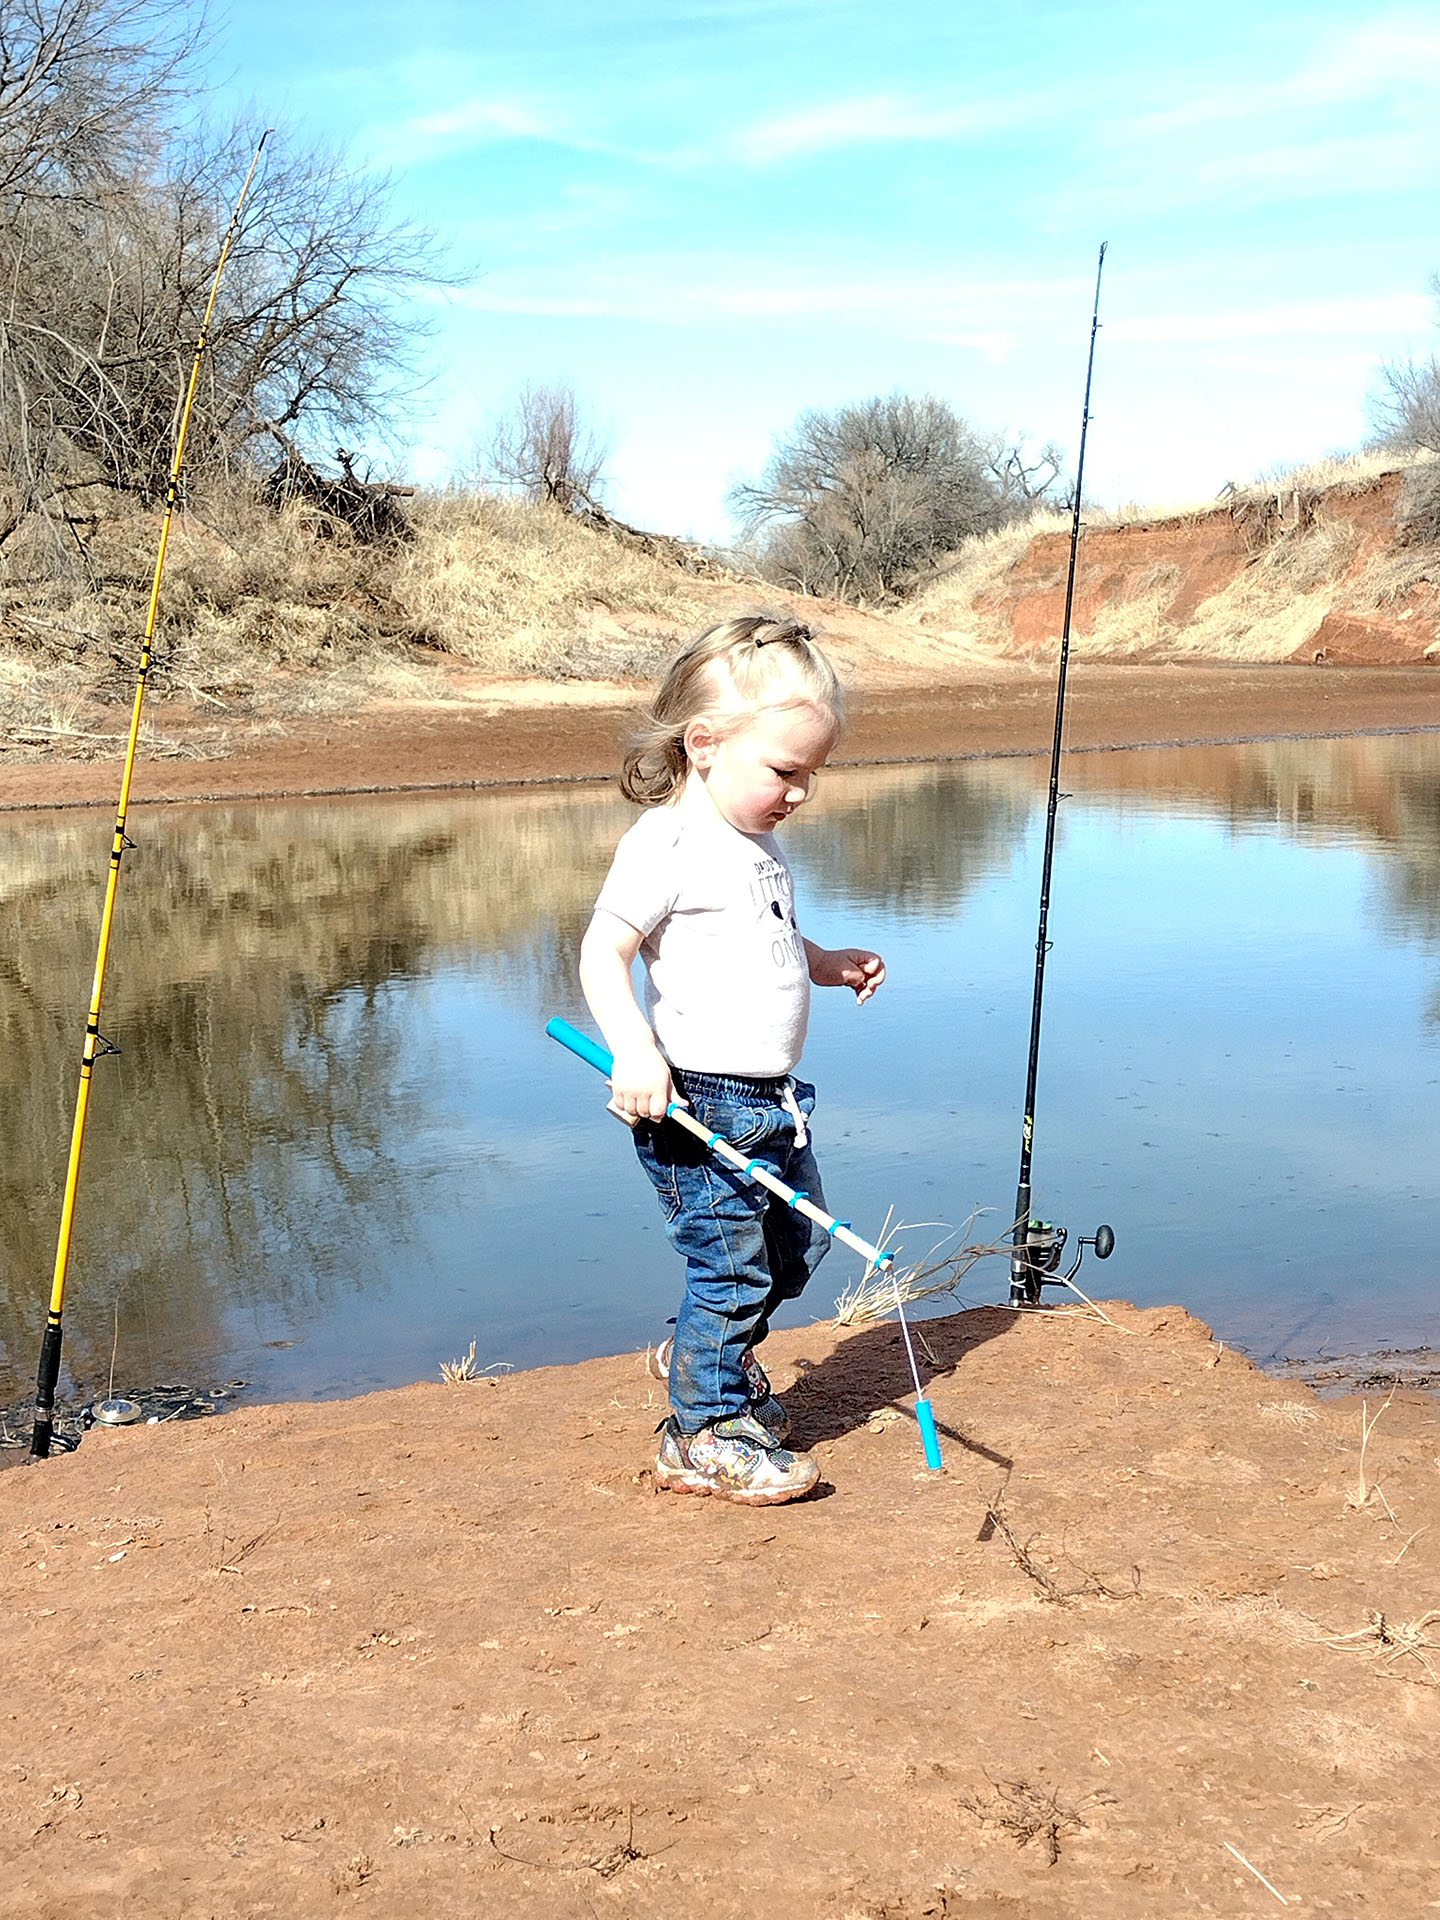 Oklahoma Catfish Report - Fishin' with friends and family